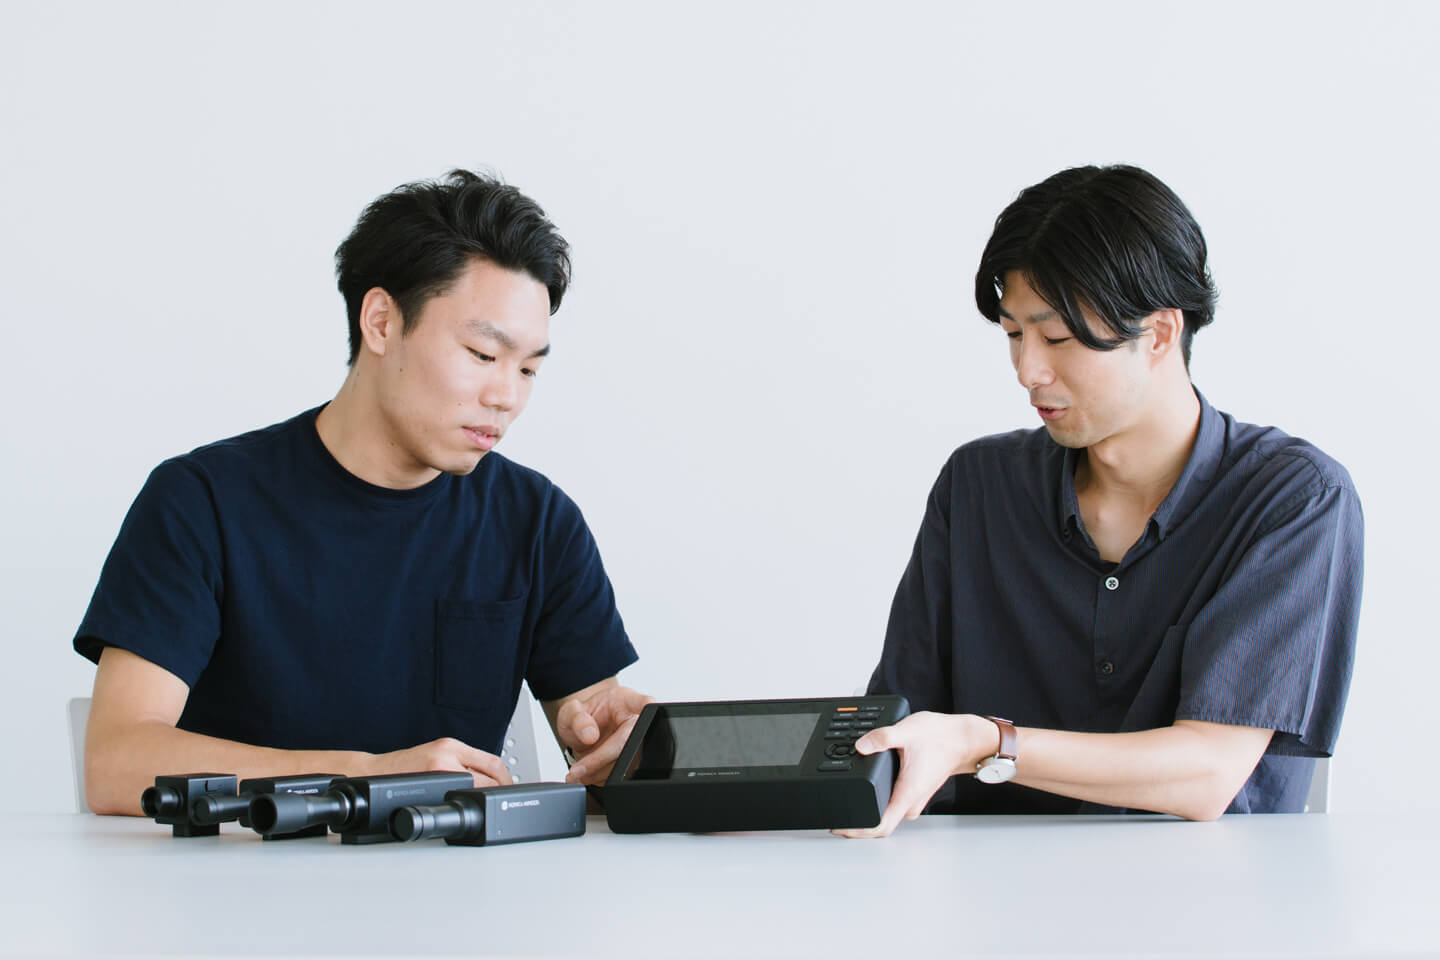 Photograph: Jun Shibayama and Naoaki Iwamatsu being interviewed in front of a mock-up